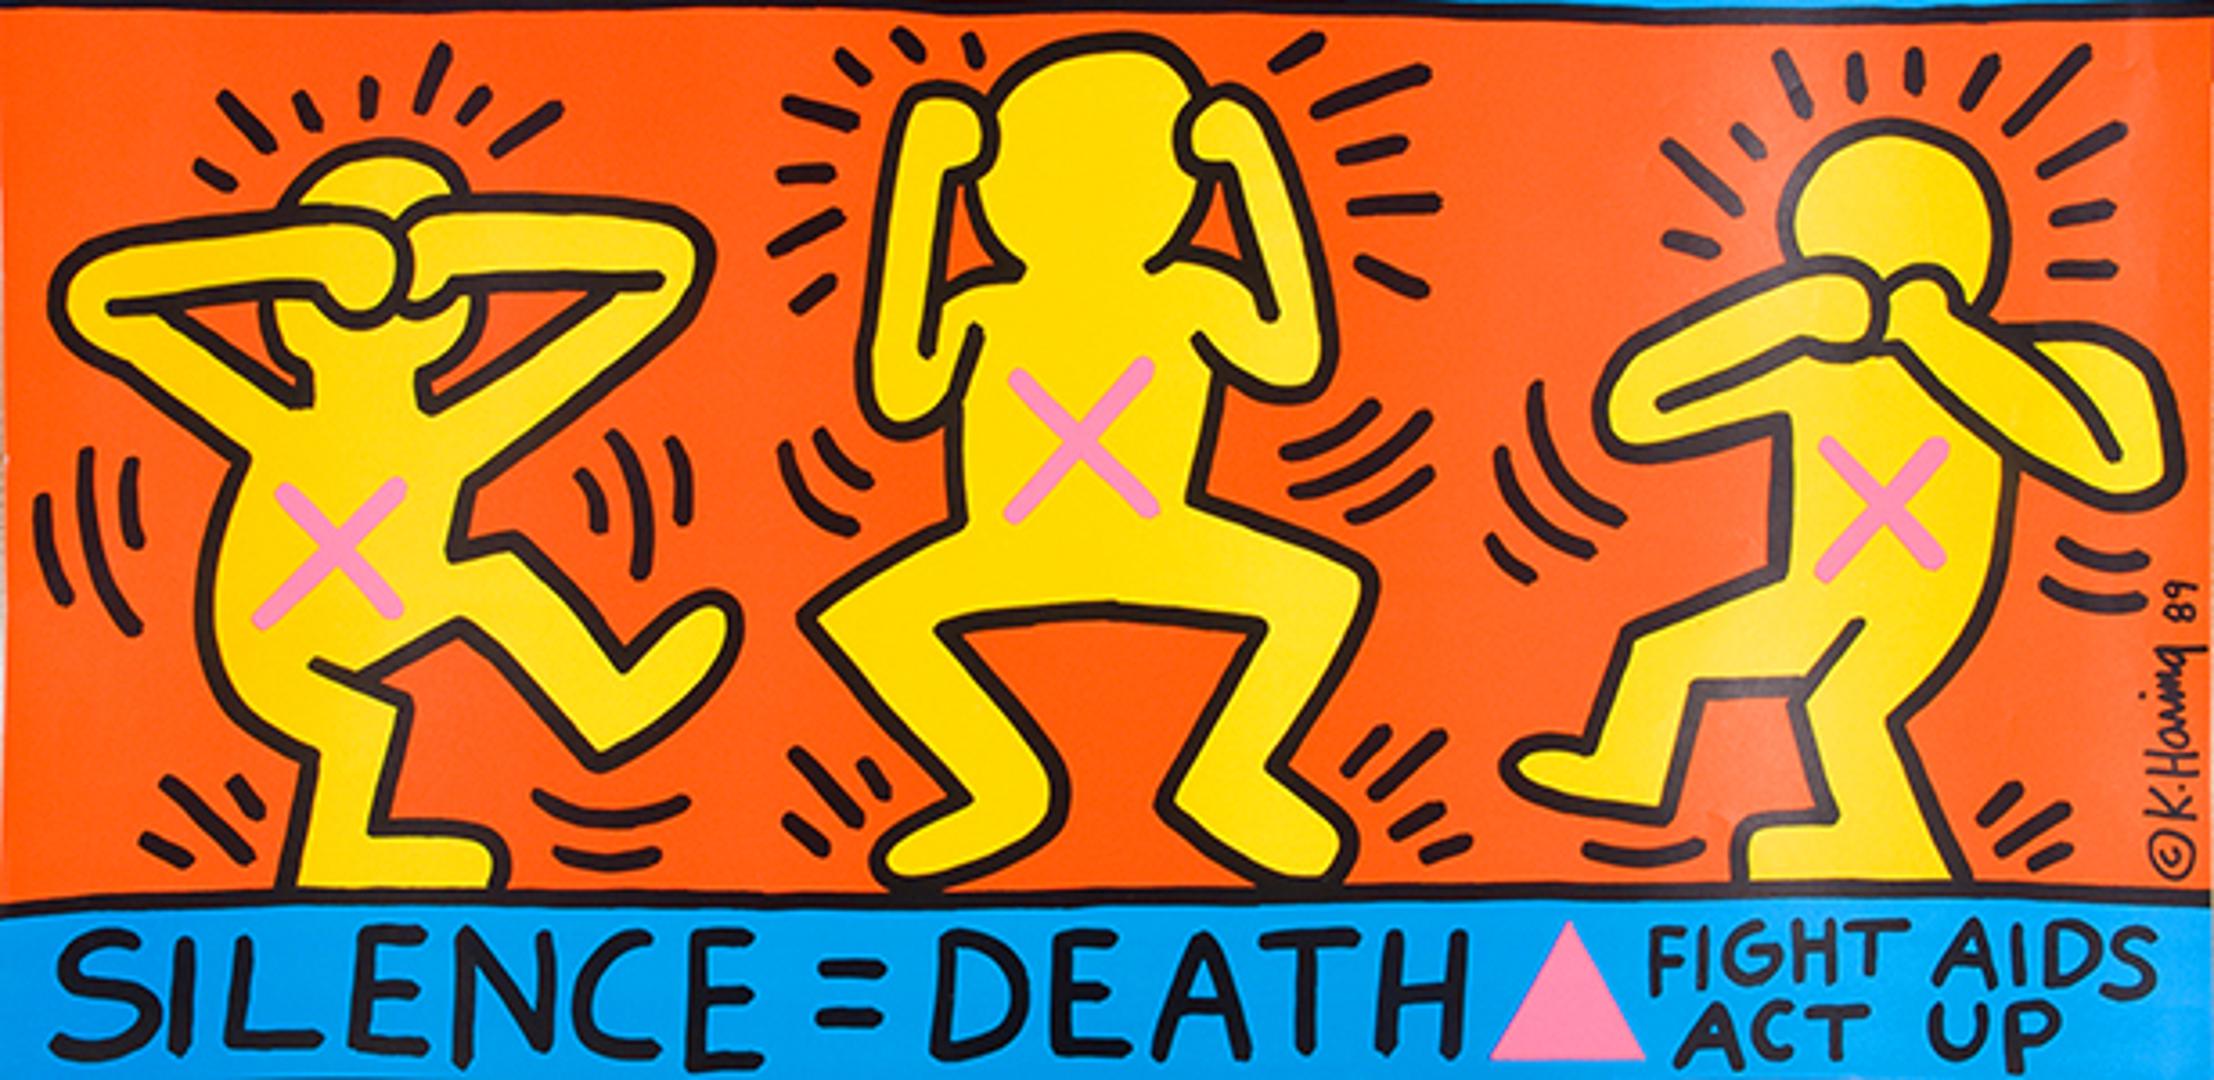 Keith Haring, kojem je AIDS dijagnosticiran 1989., odgovorio je na tu bolest naslikavši “Ignorance = Fear”